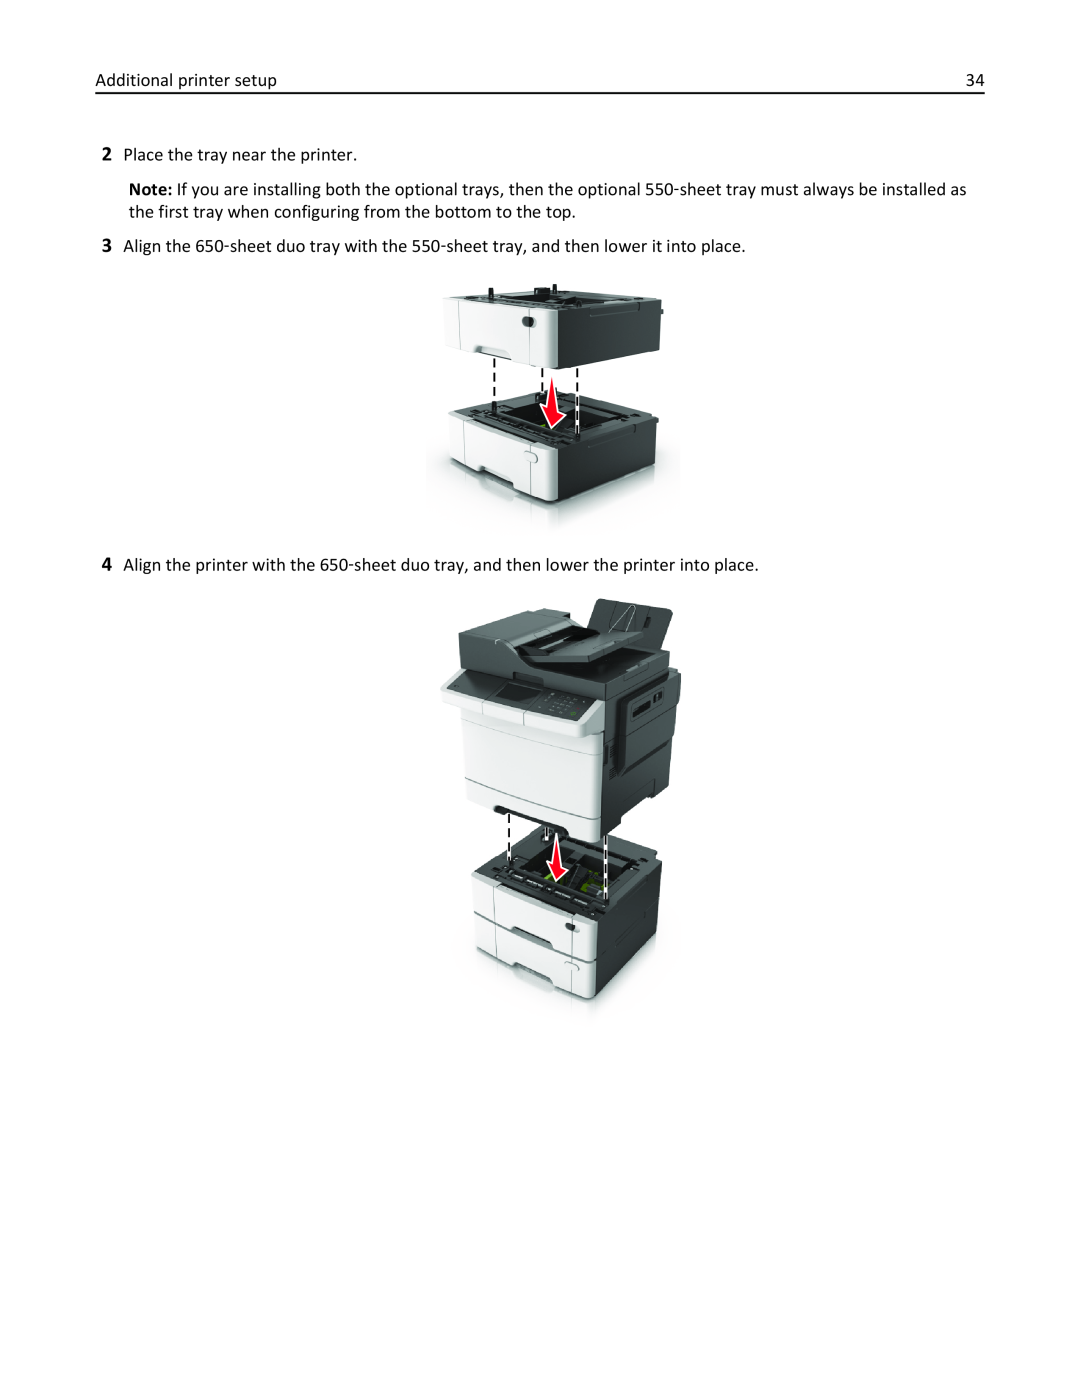 Lexmark 436 manual Additional printer setup, Place the tray near the printer 